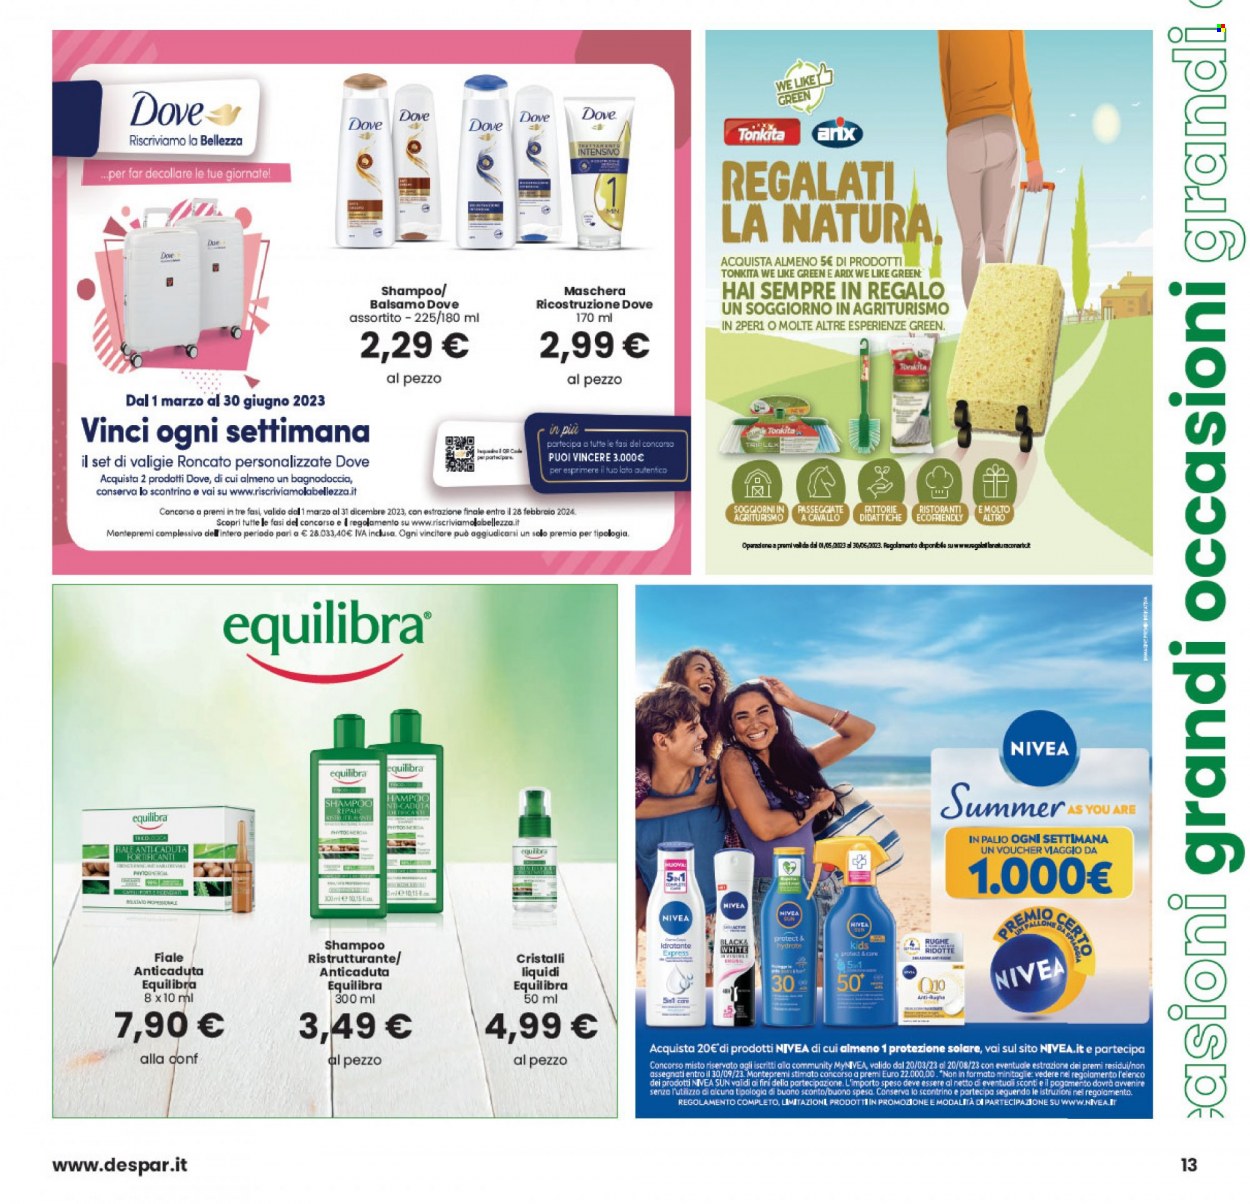 thumbnail - Volantino Interspar - 25/5/2023 - 7/6/2023 - Prodotti in offerta - Equilibra, Nivea, gel doccia, Dove Cosmetics, balsamo, maschera, shampoo, Tonkita, valigia, pallone. Pagina 13.